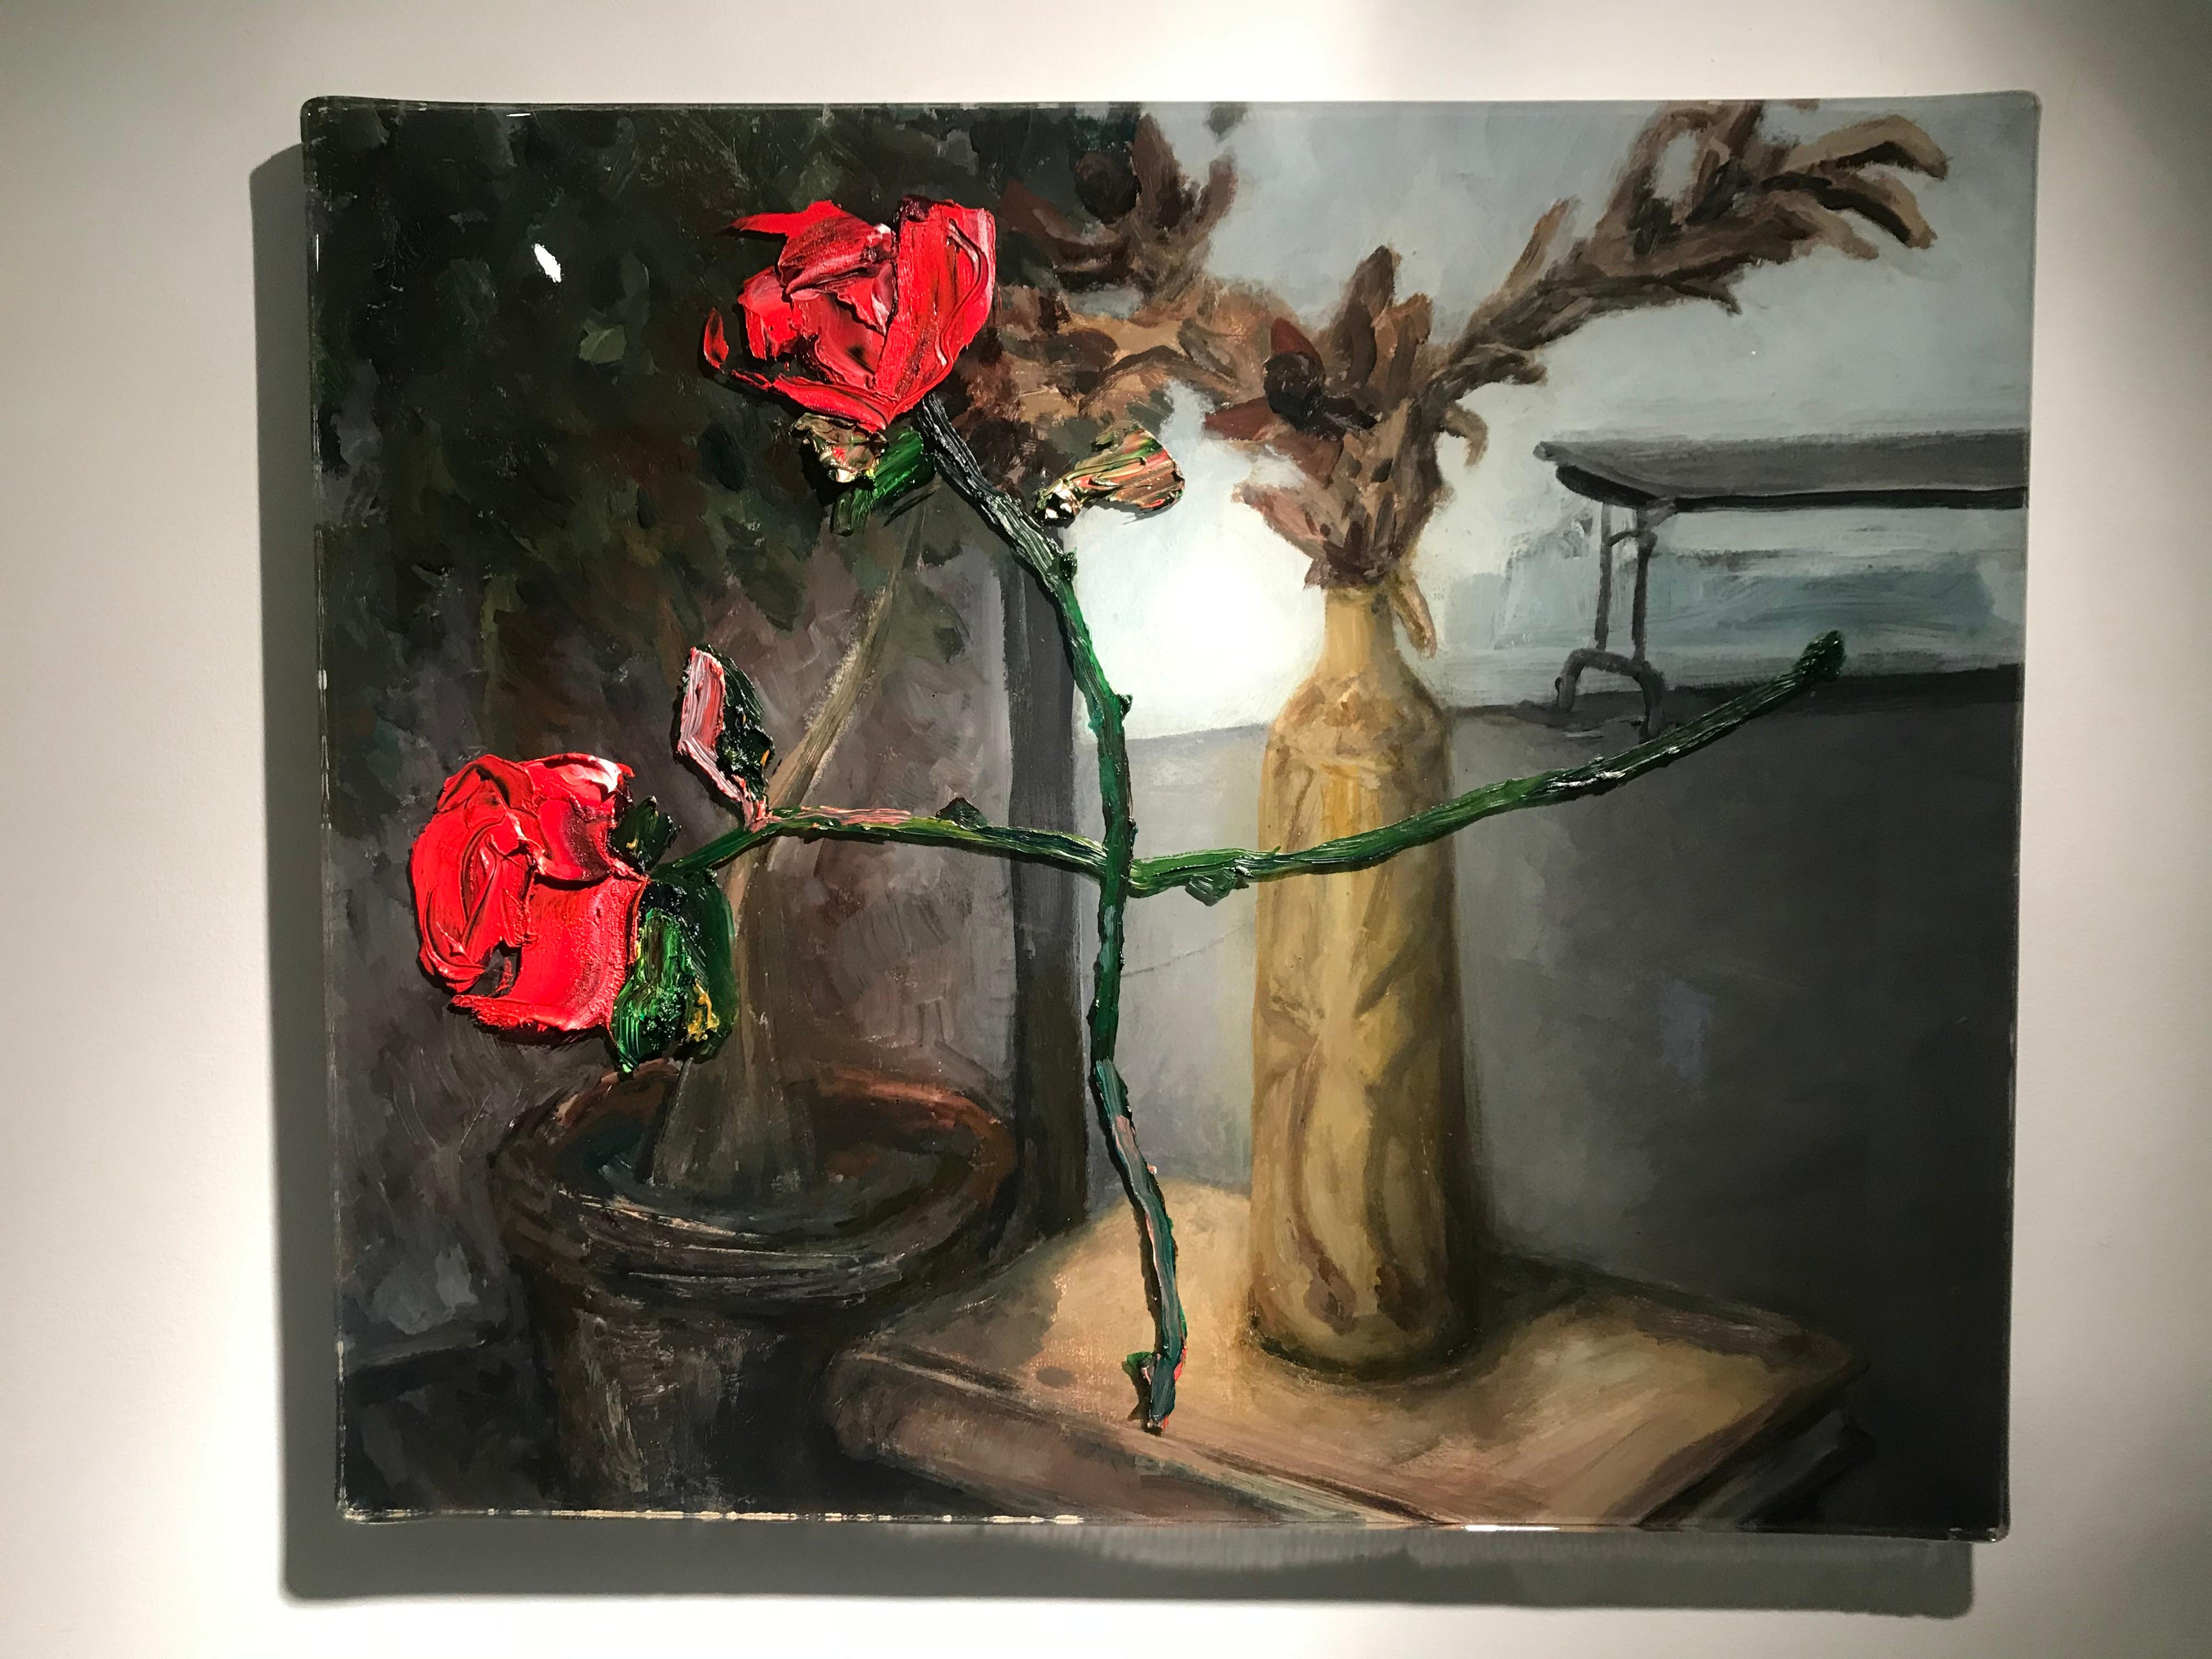 Underneath the two red roses in Darius Yektai's 